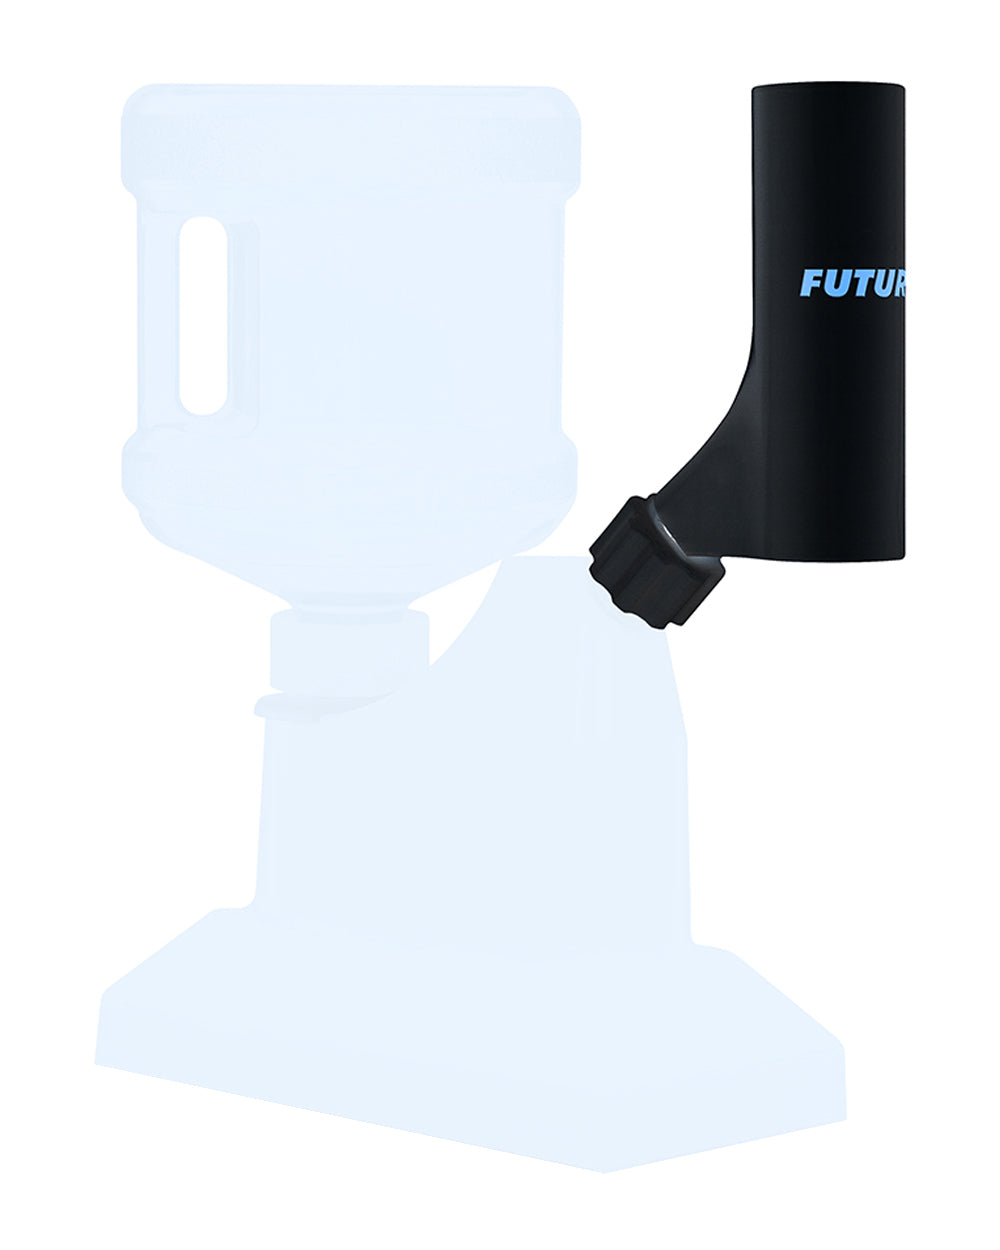 FUTUROLA | Venturi Steamer Head 31mm Attachment for CONE LOCK™ 3X Tubes| Label and Seal Cones & Cartridges - 1